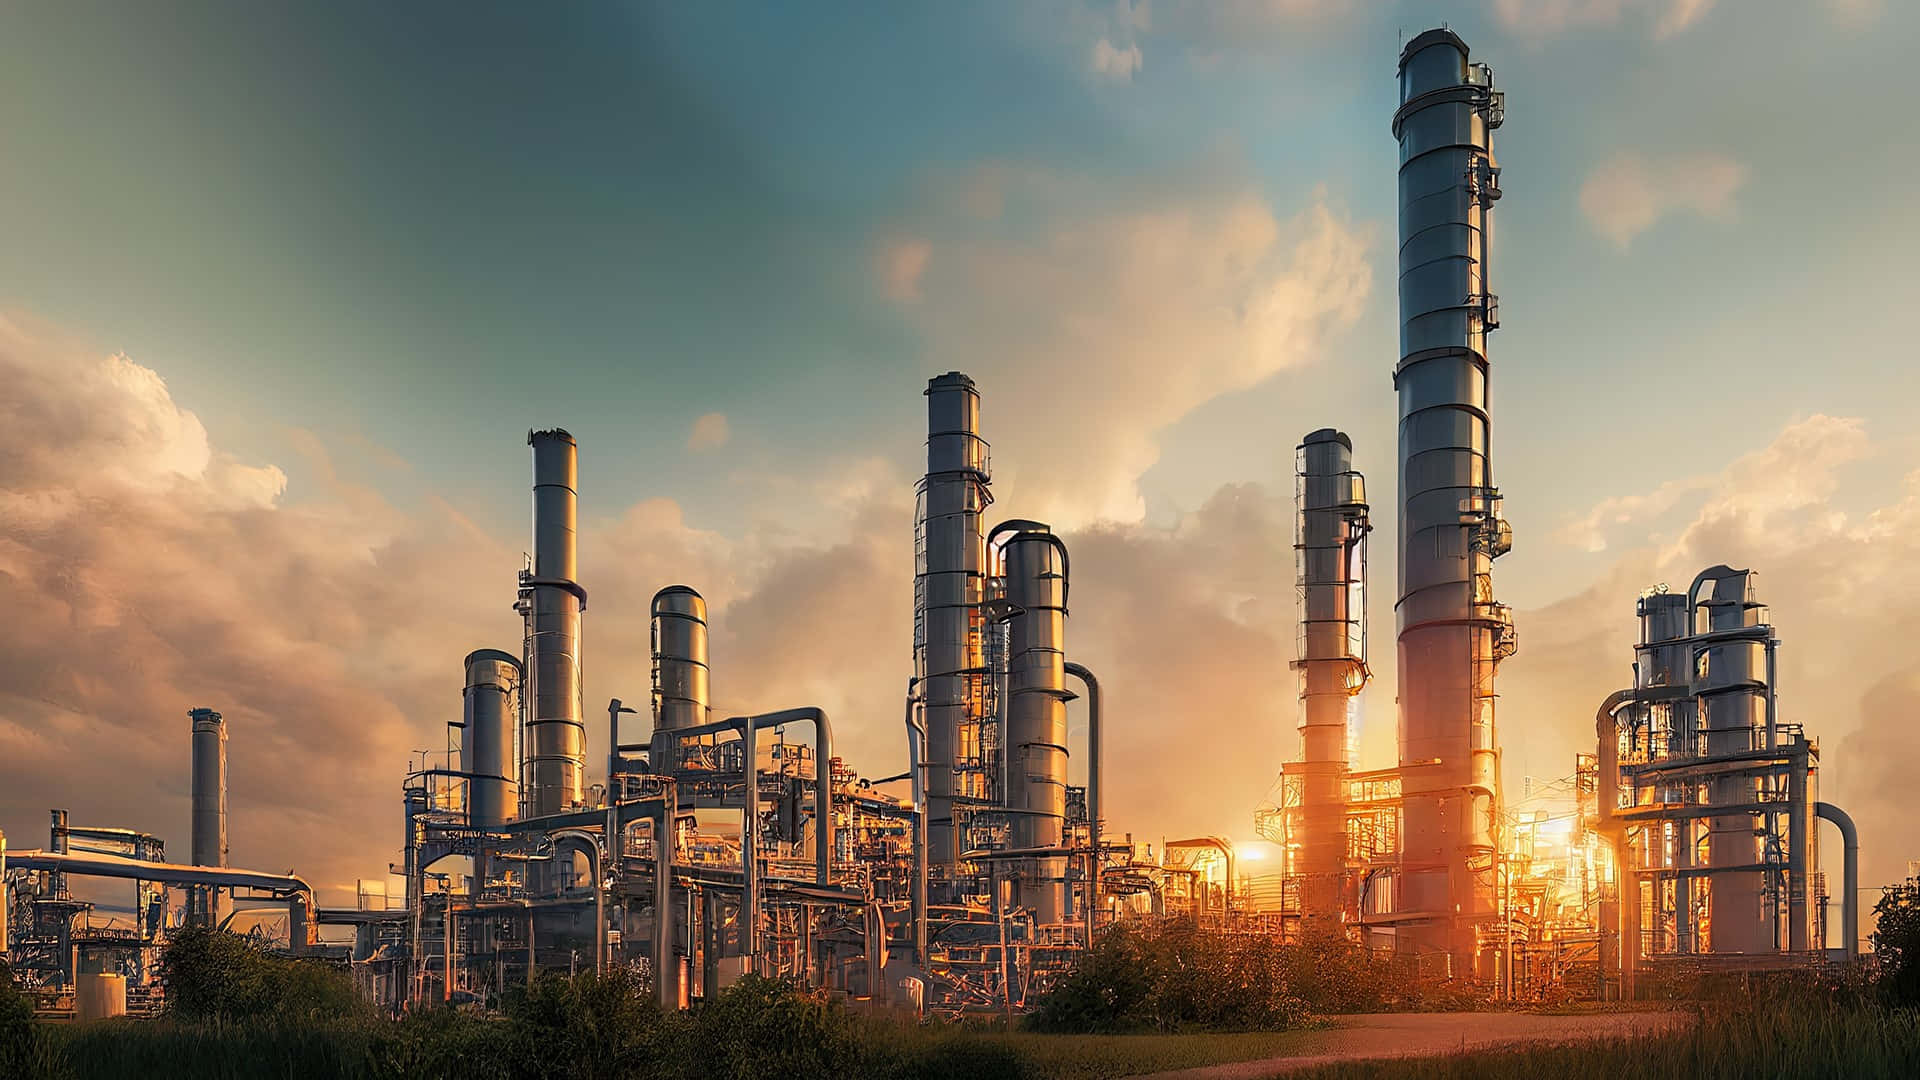 Industrial Sunset Refinery Landscape Wallpaper